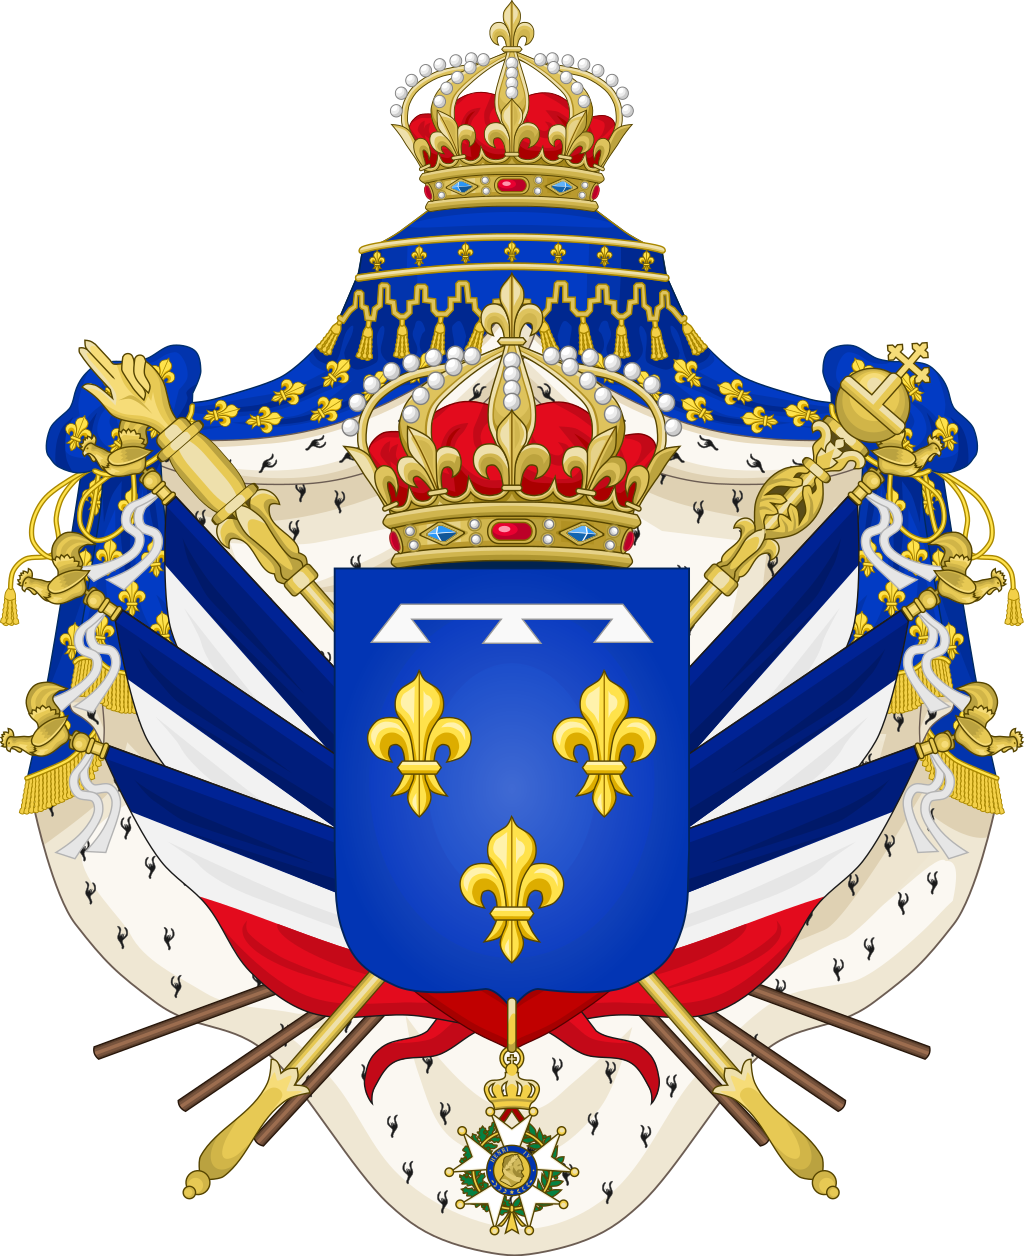 Ferdinand-Louis-Philippe-Charles-Henri, duke d'Orléans, Royalty, Bourbon  Dynasty & French Revolution